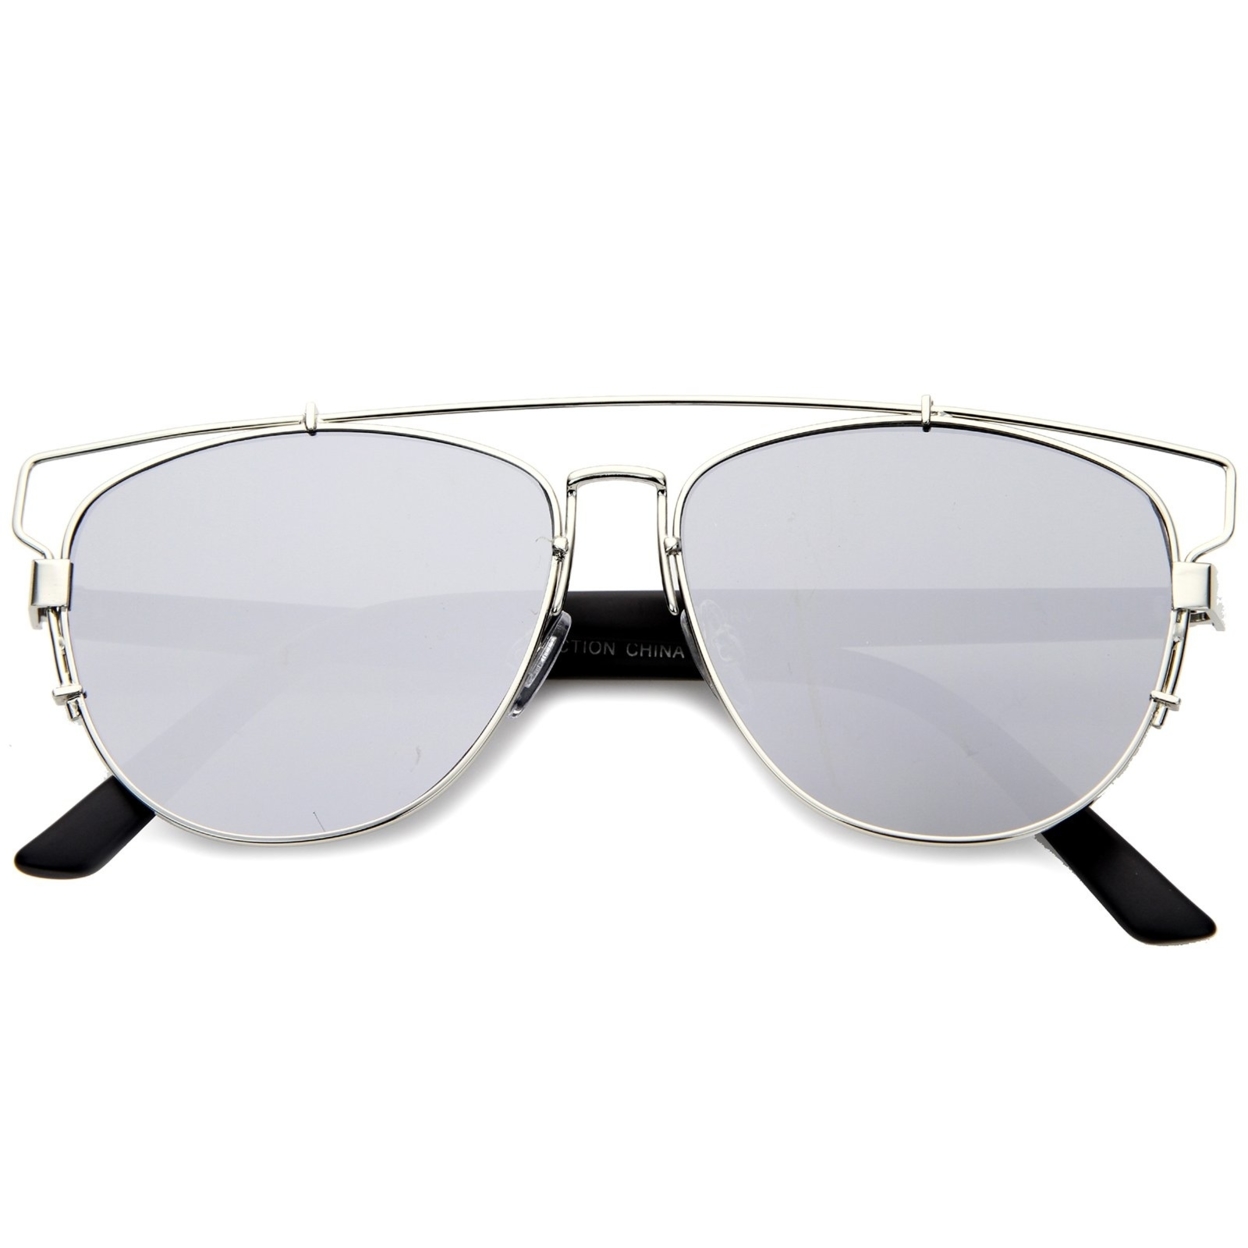 Technologic Full Metal Crossbar Flash Mirror Flat Lens Aviator Sunglasses 54mm - Silver / Silver